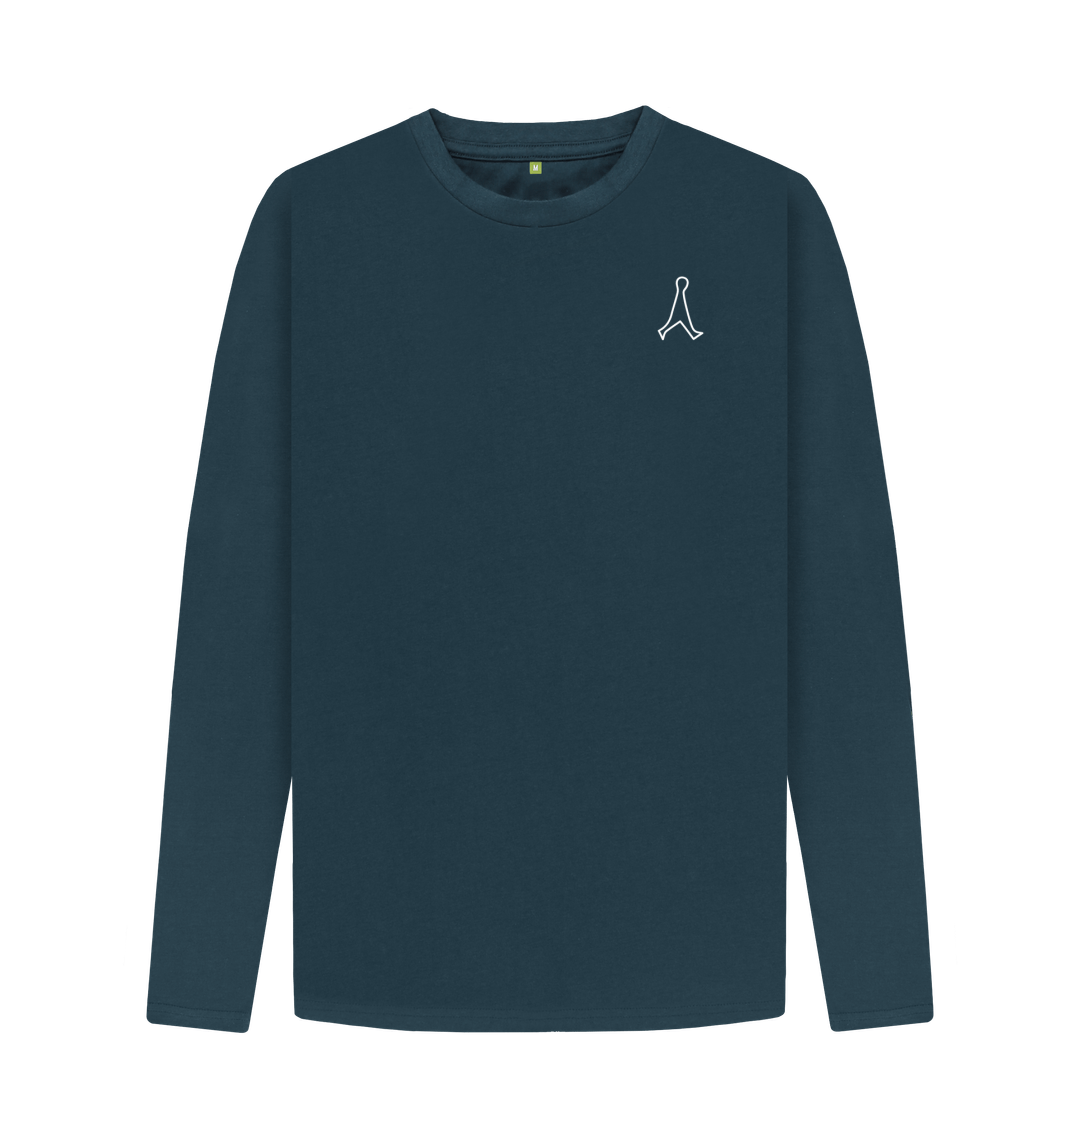 Men's organic long sleeve cotton t shirt - T2F active